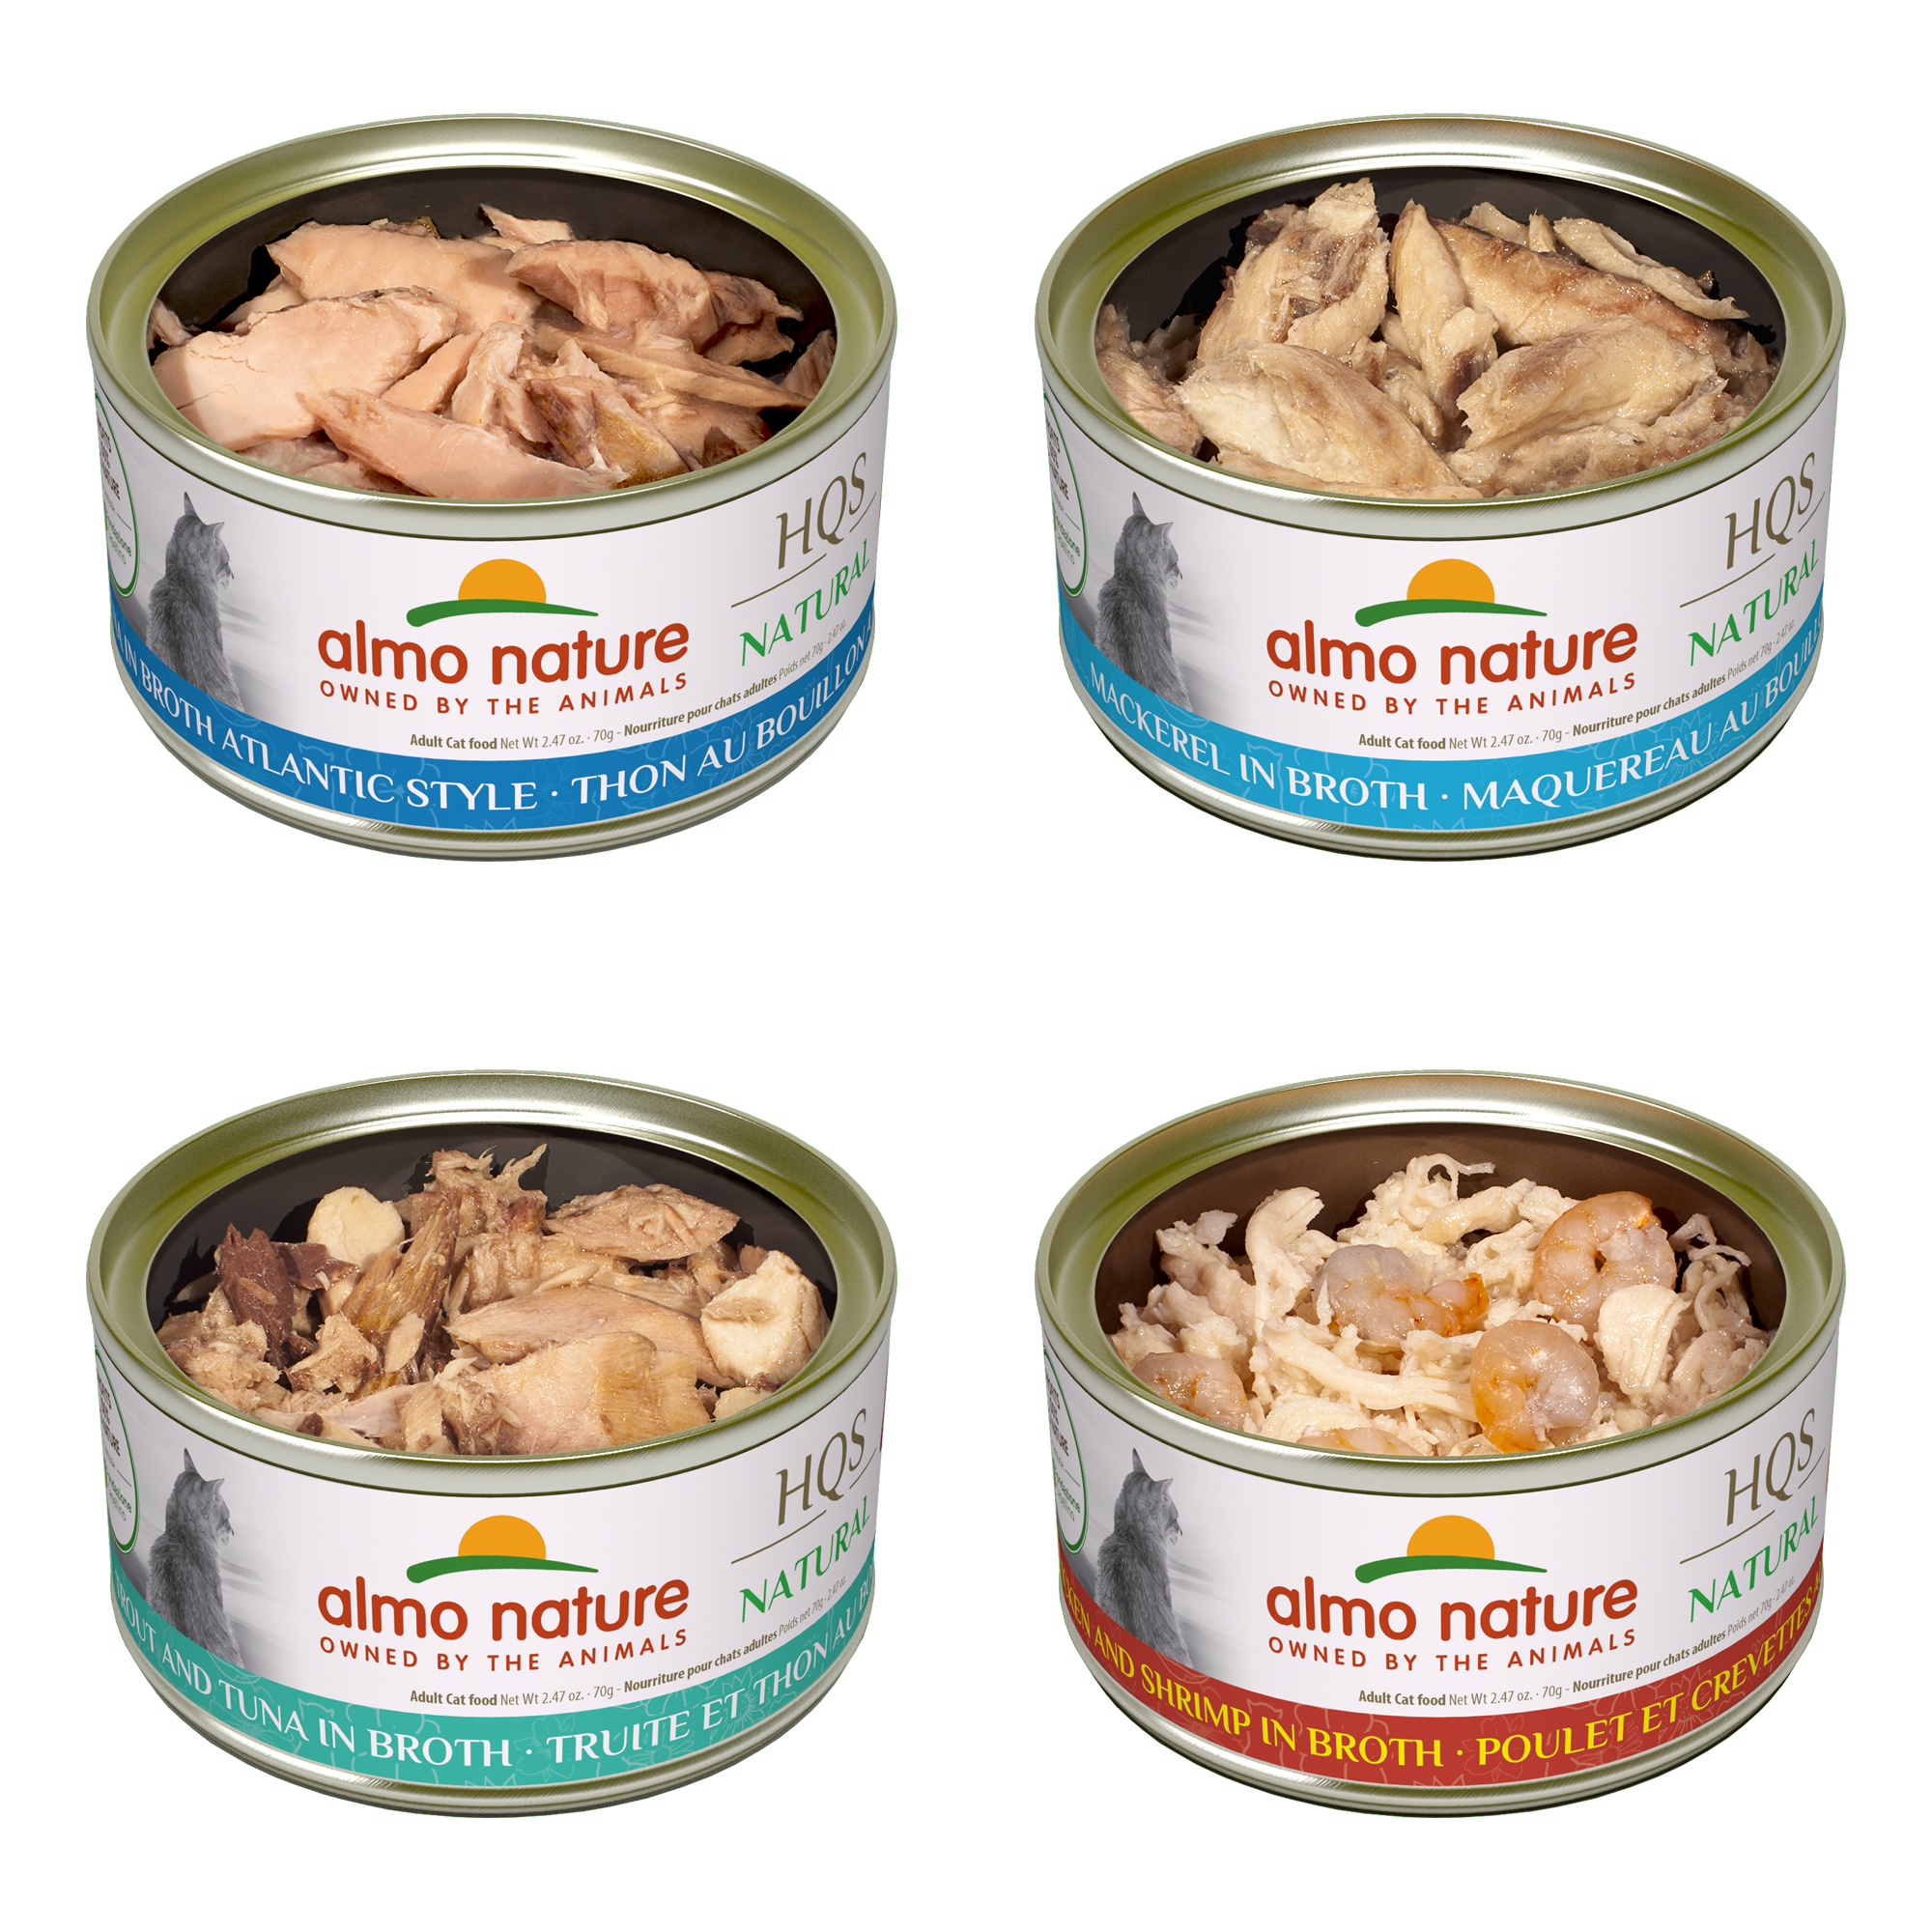 Almo Nature - HQS Natural Tuna, Mackerel, Chicken & Shrimp, Trout & Tuna Variety Pack (Wet Cat Food)